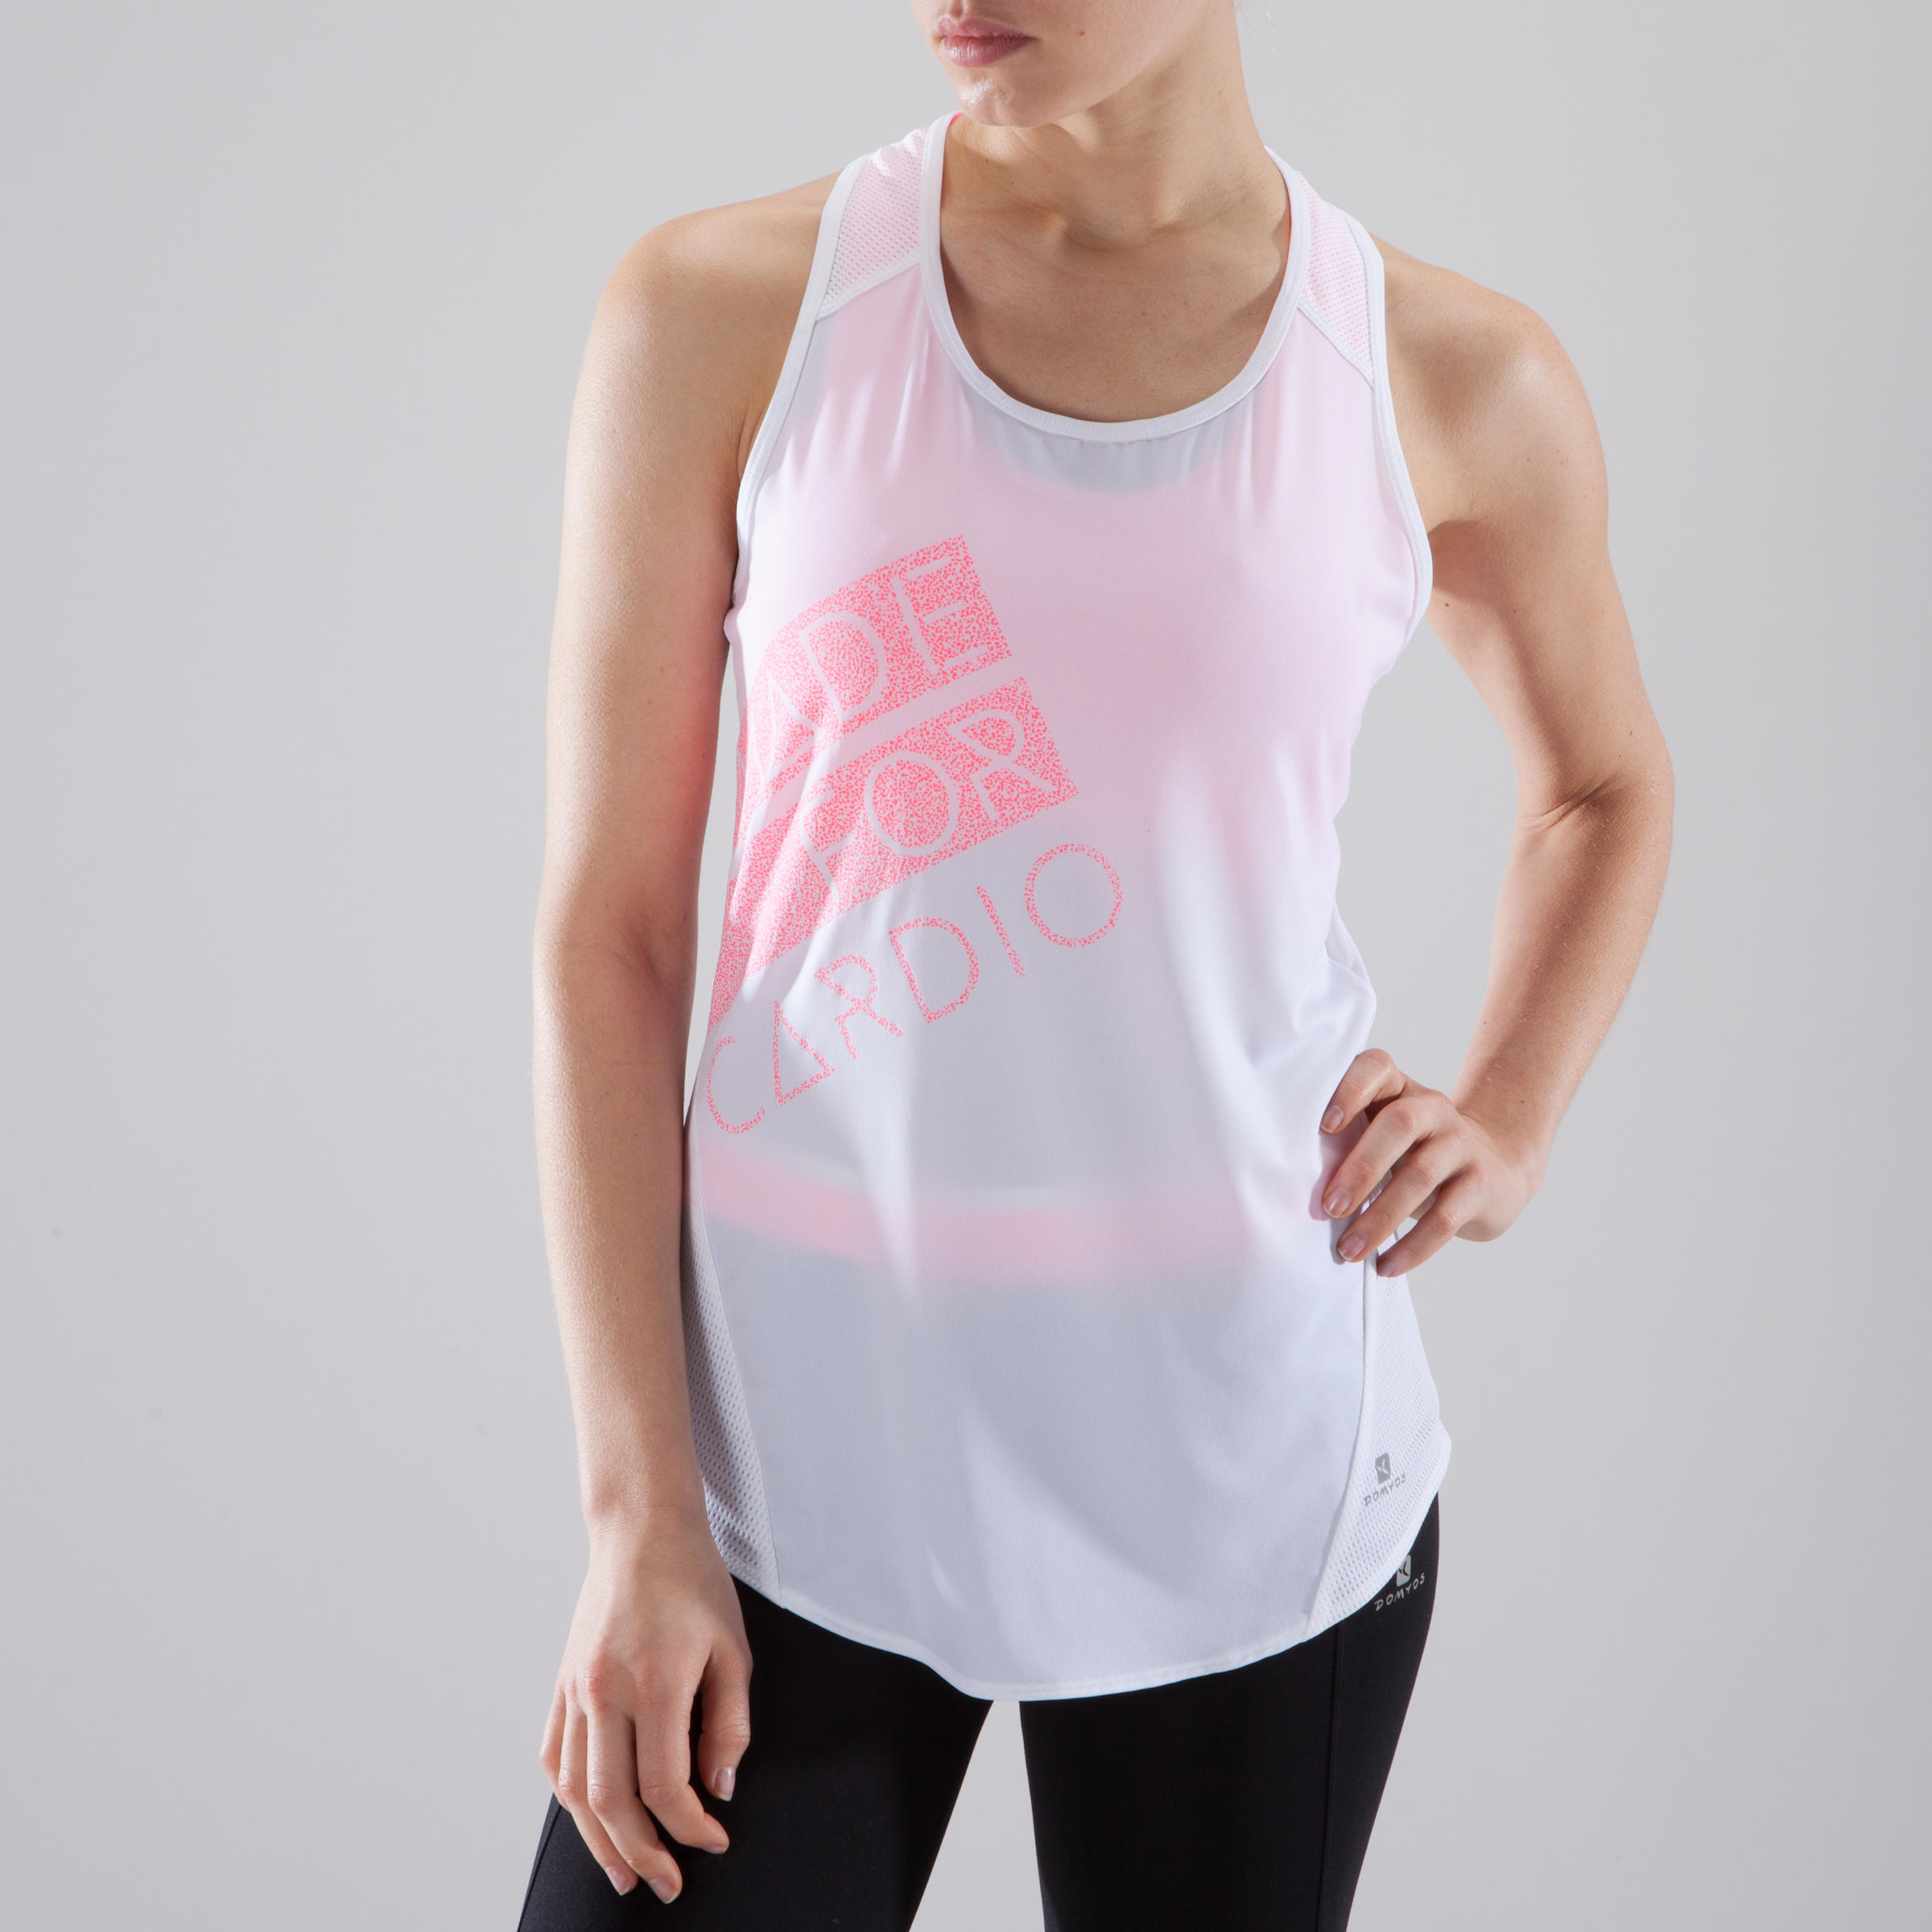 DOMYOS 120 Women's Fitness Cardio Training Tank Top - White/Pink Print